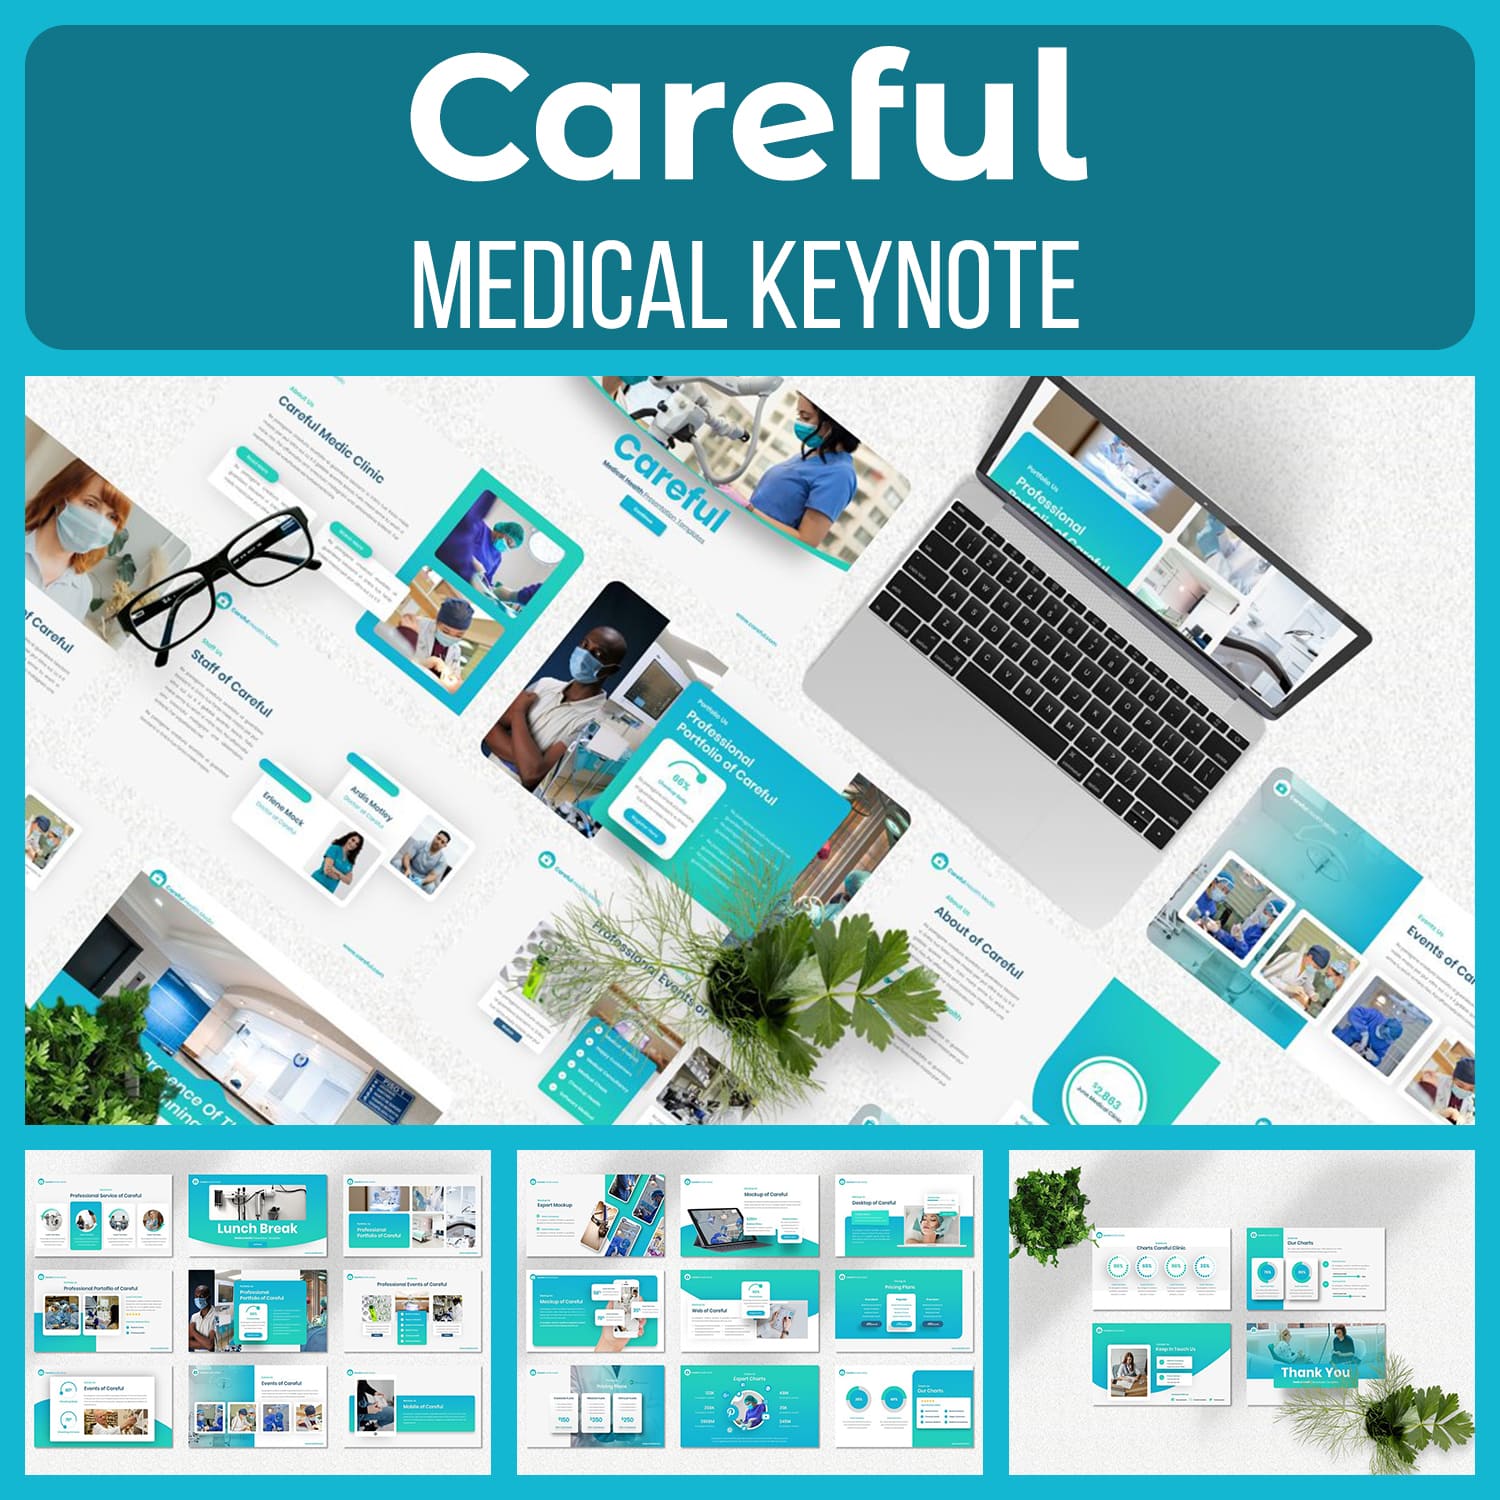 Careful - Medical Keynote main cover.